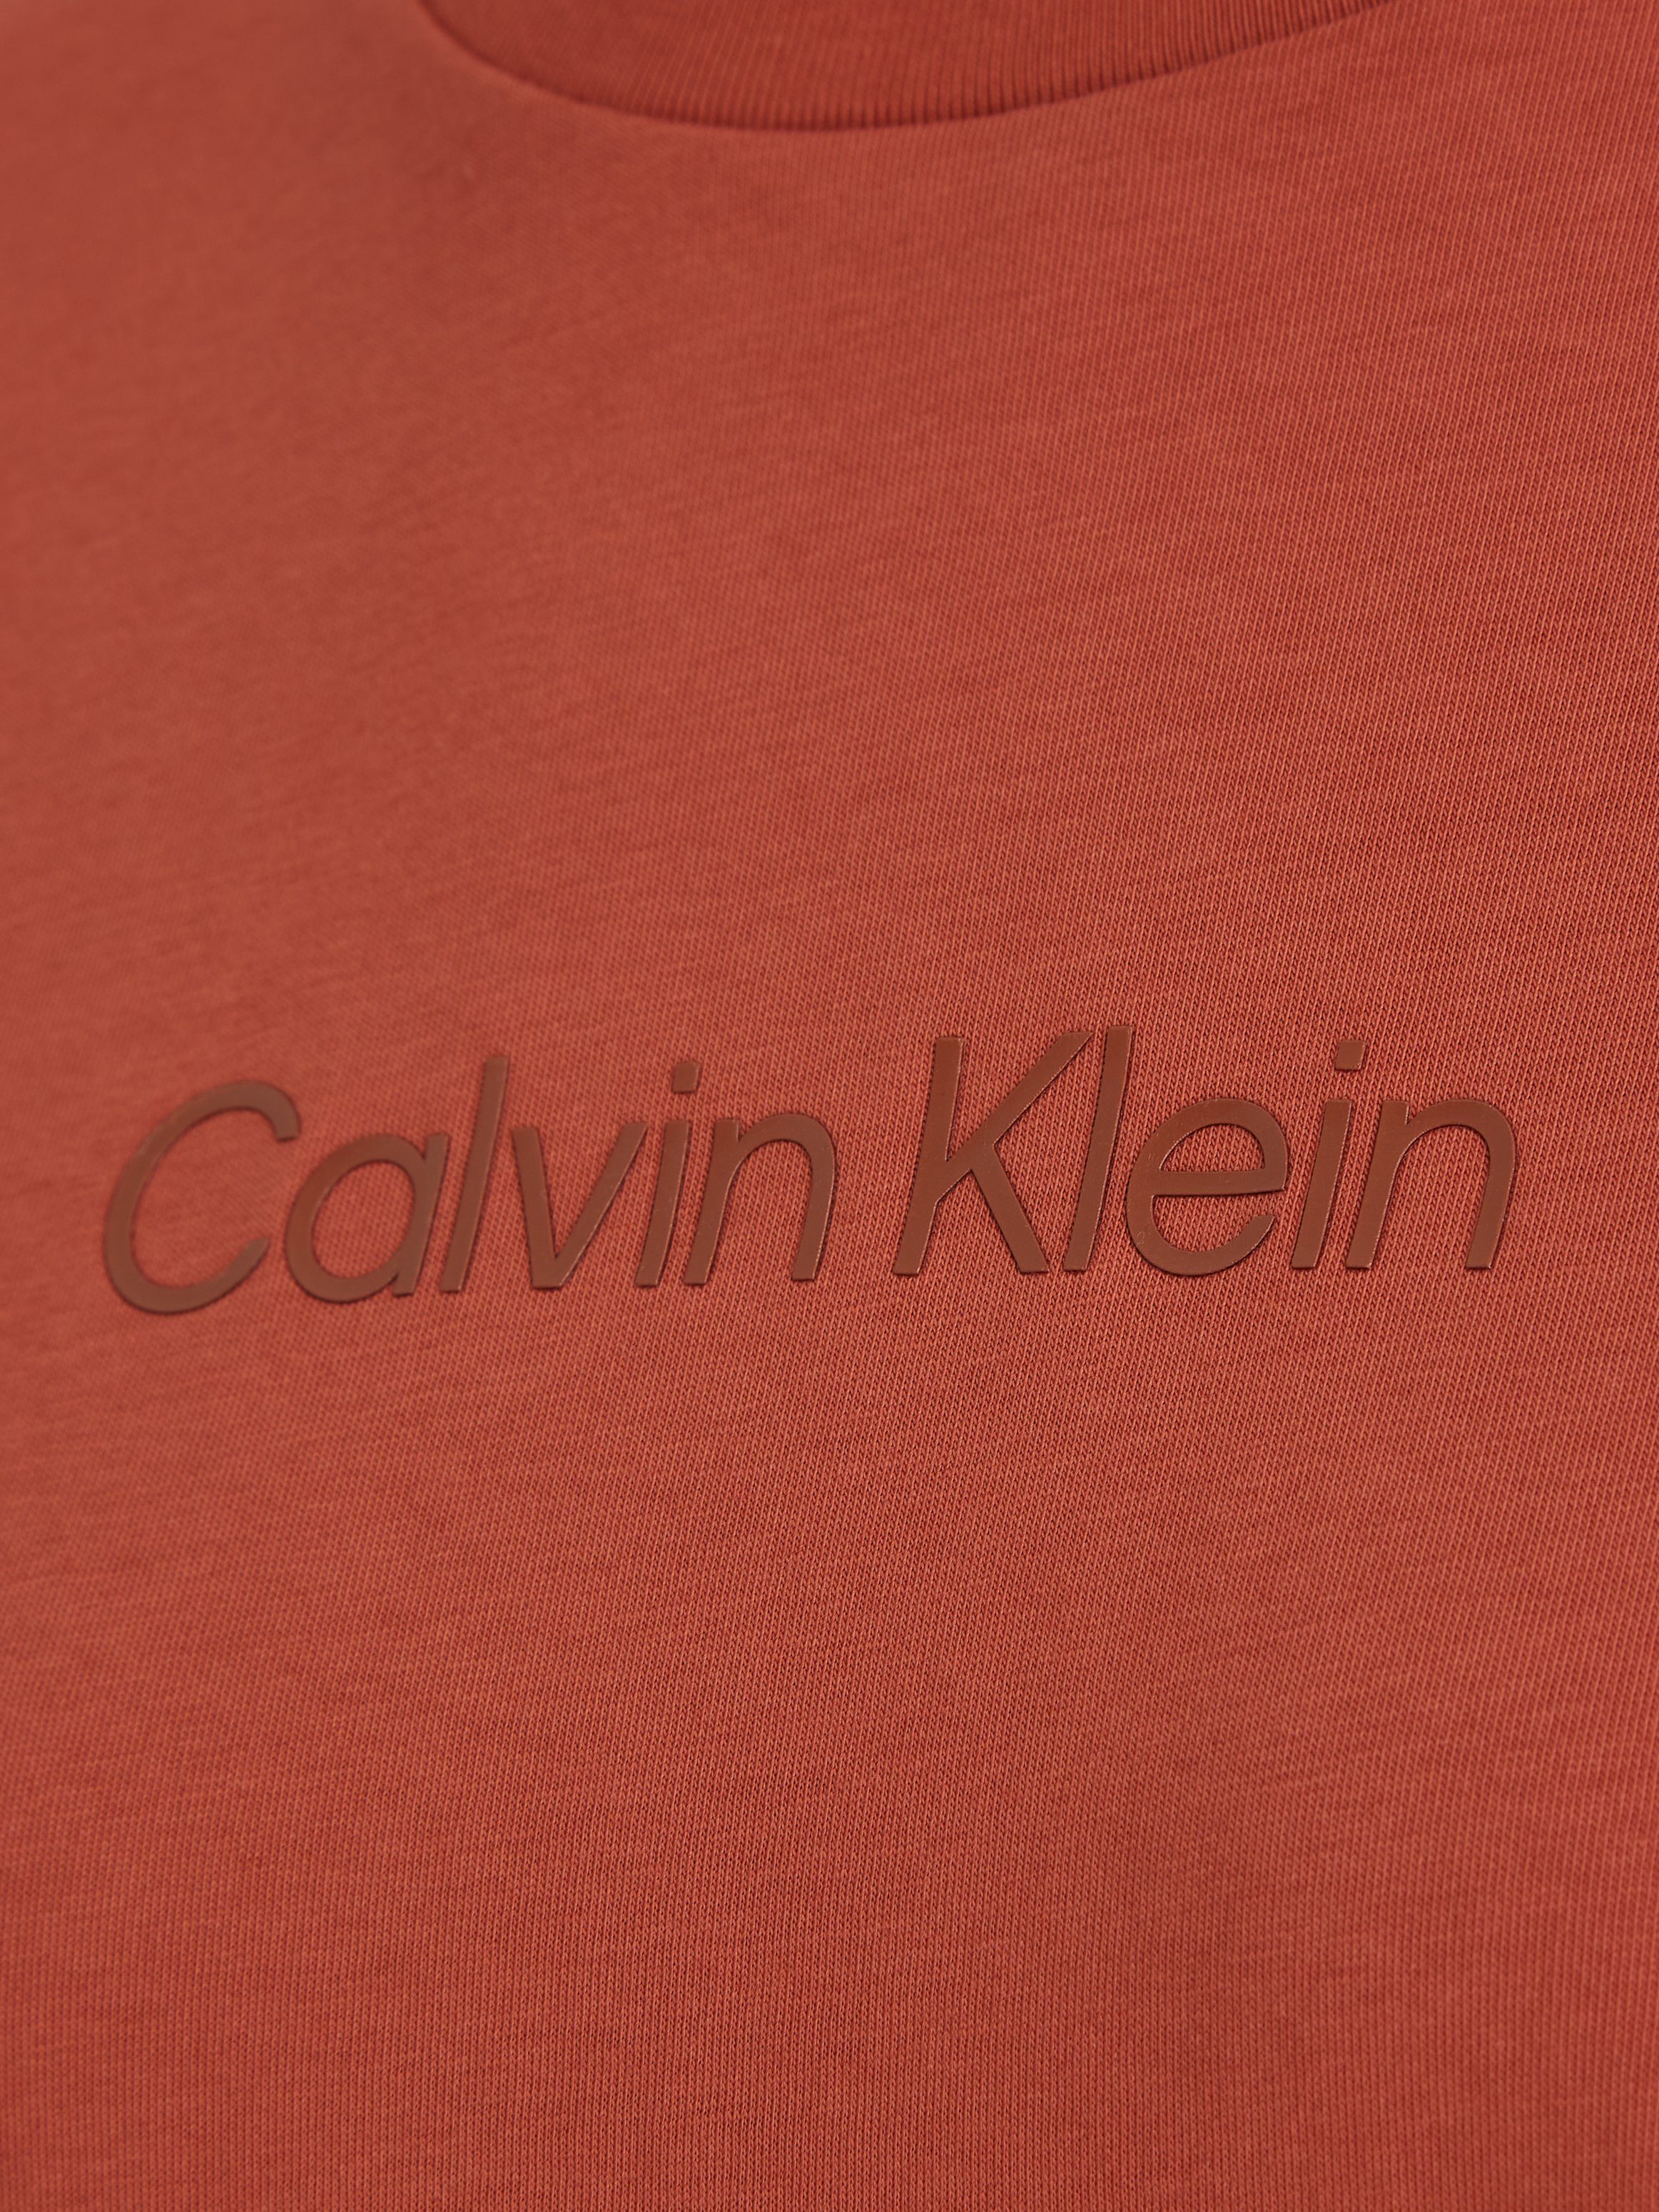 Calvin Klein T-Shirt beige LOGO REGULAR HERO Shirt